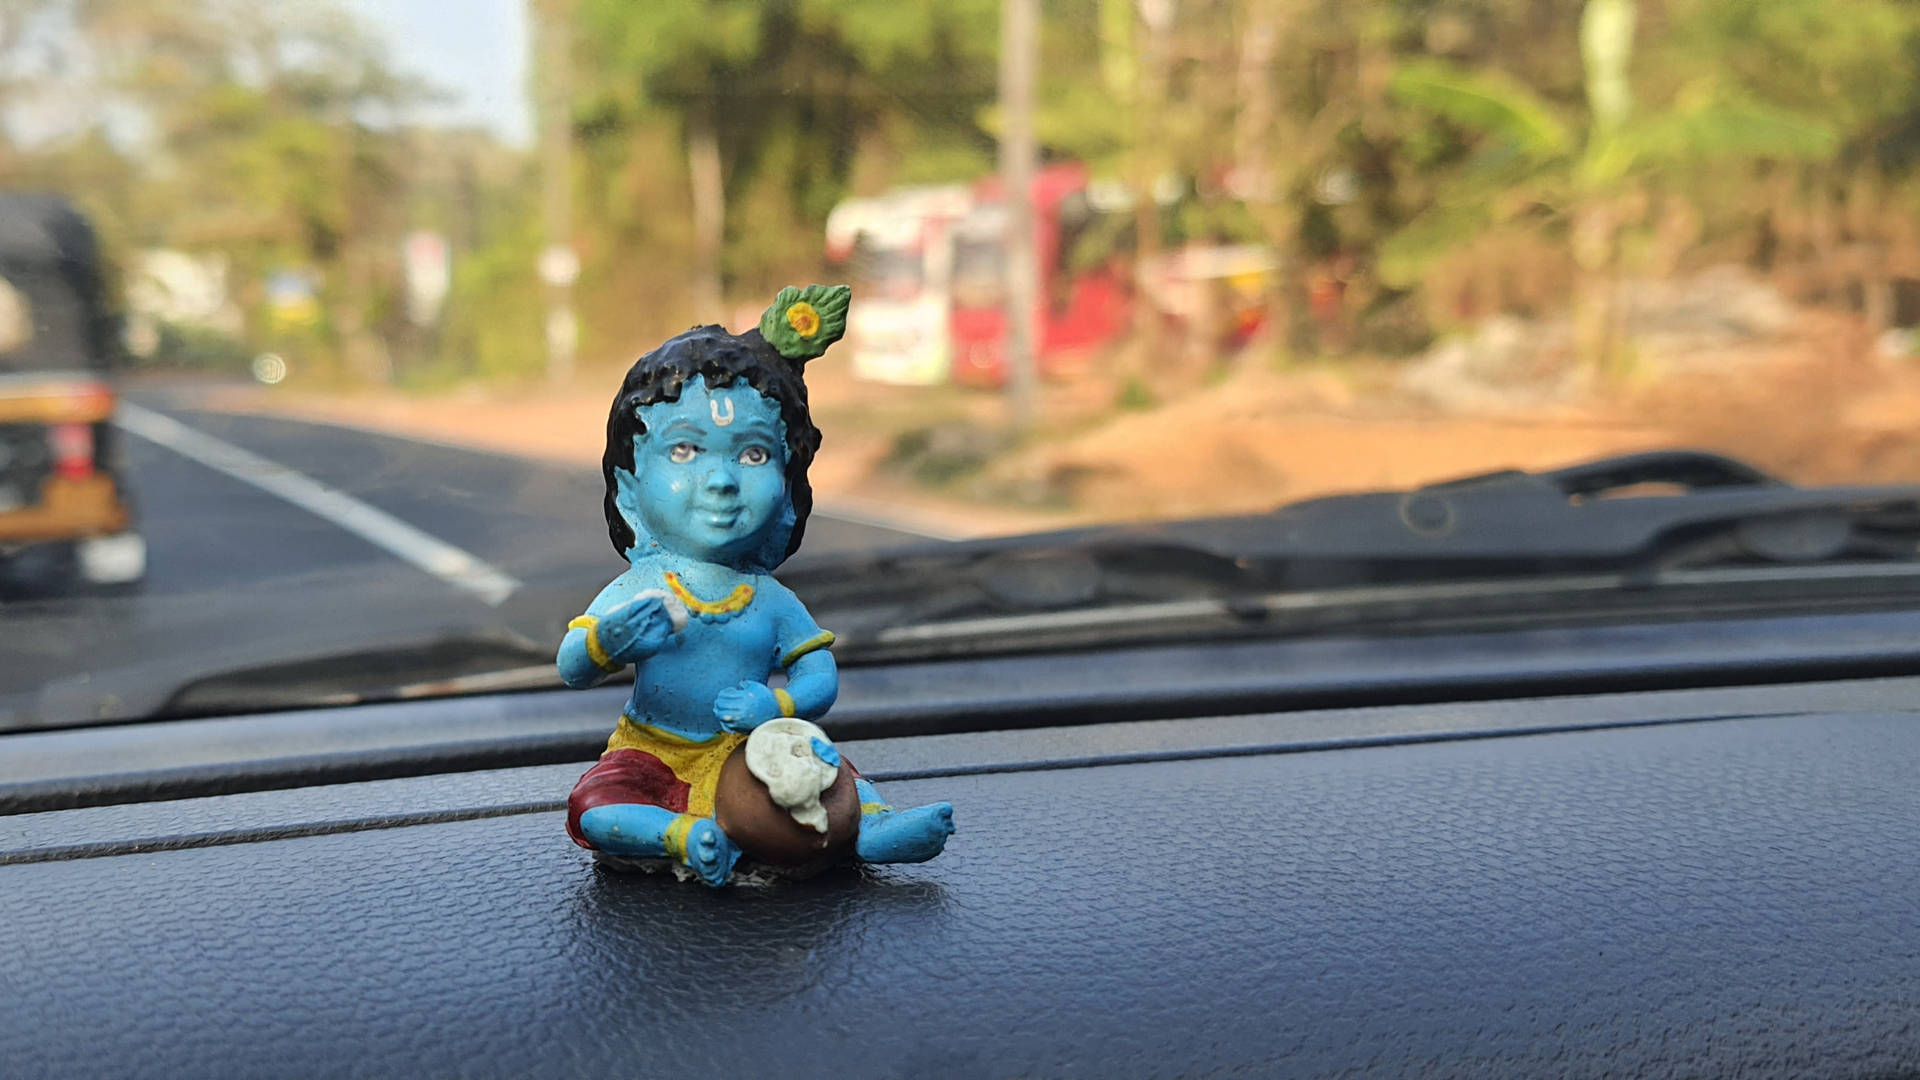 Figurine Of Baby Krishna 4k Background